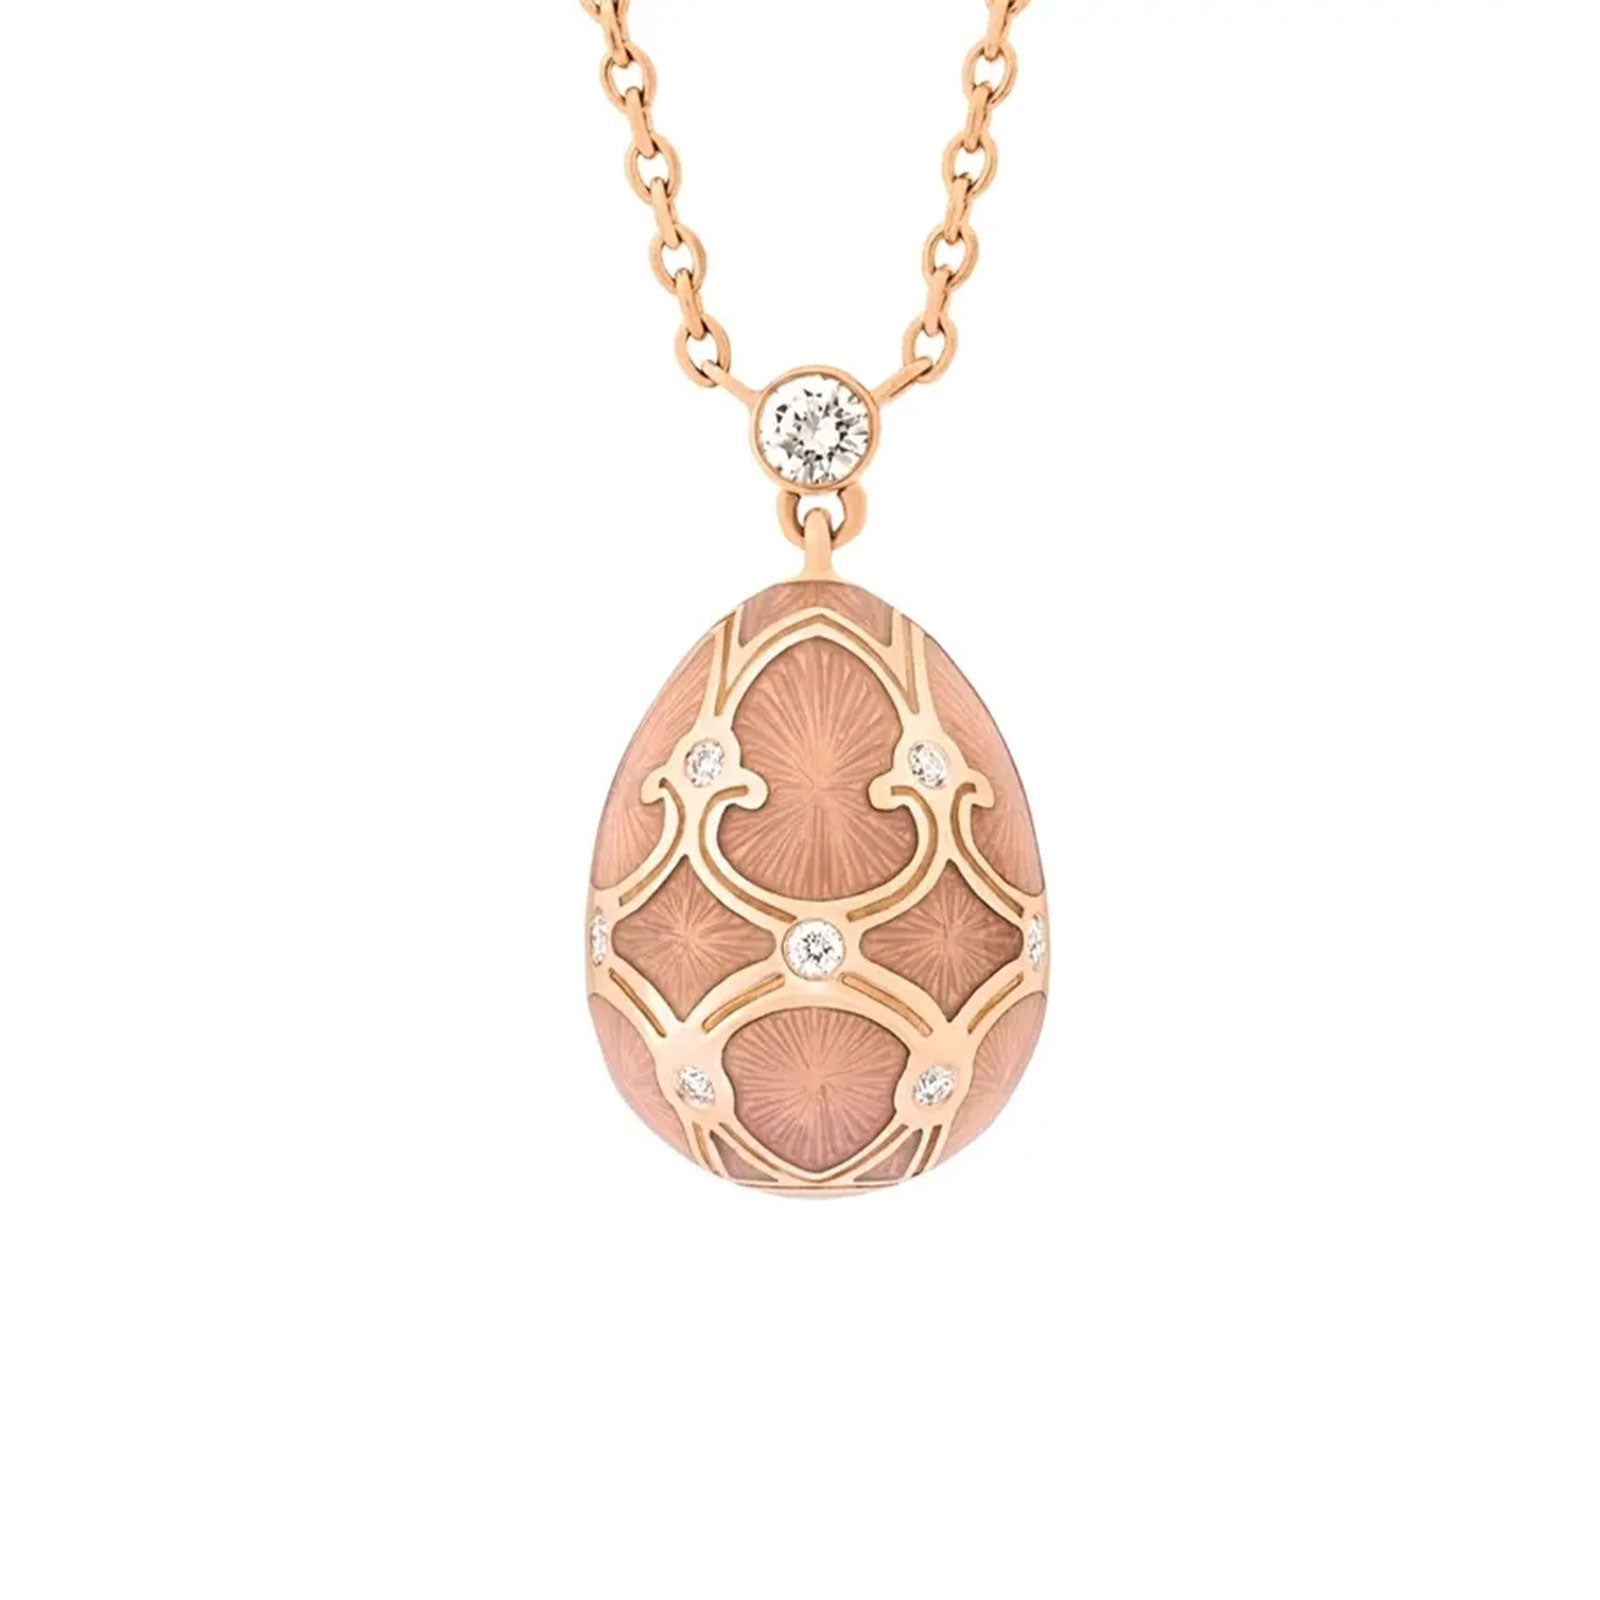 Faberge Heritage Rose Gold Pink Guilloche Enamel Petite Egg Pendant - 1152FP1441